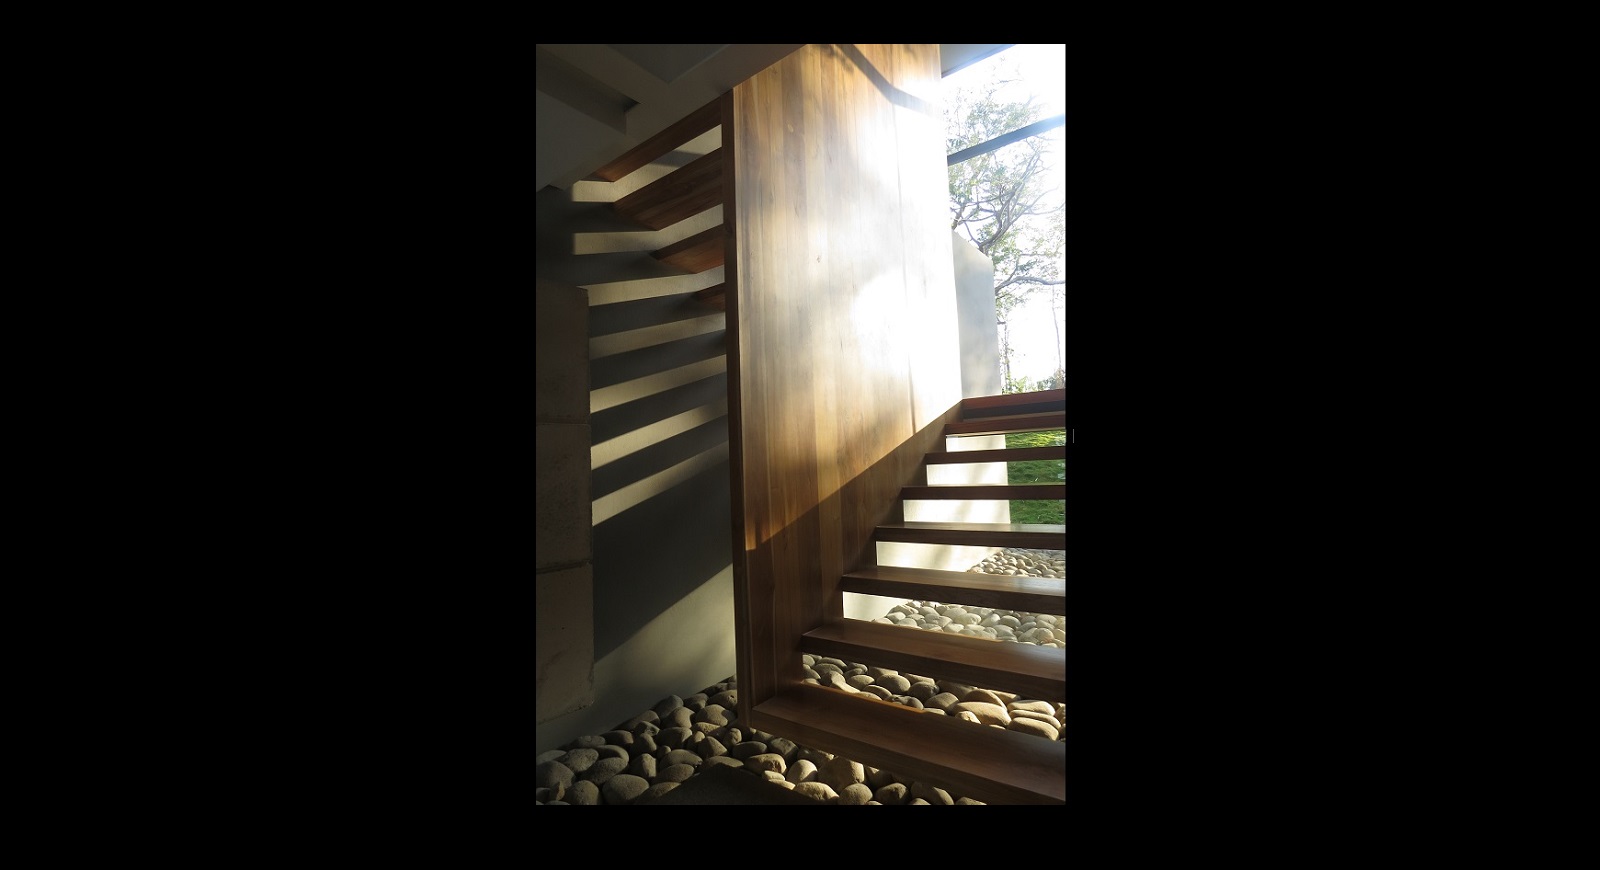 Stair-Escaleras (17)